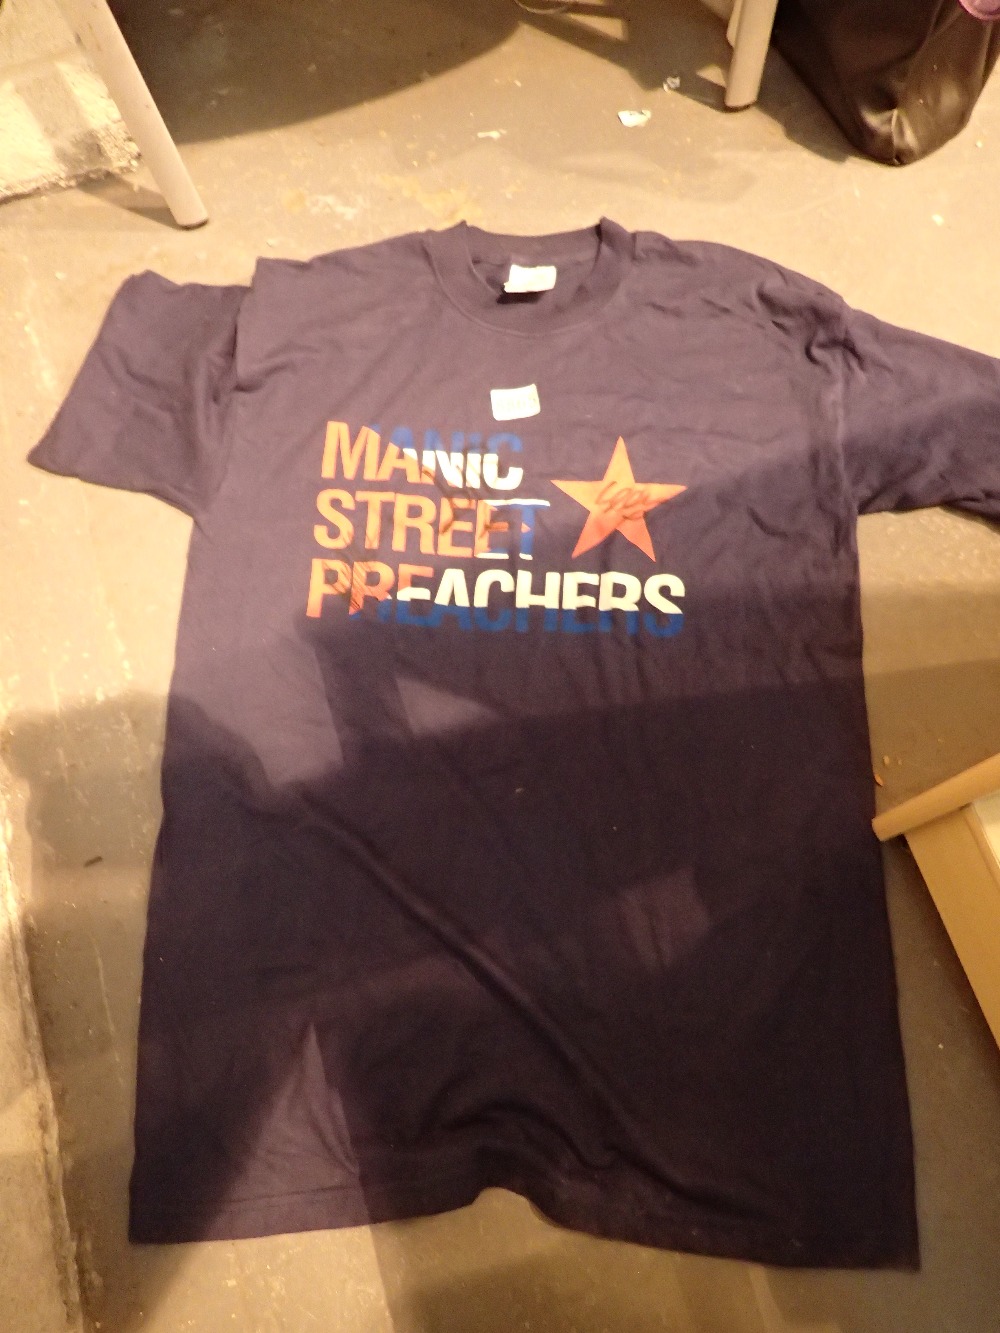 Signed Manic Street Preachers tshirt no provenance